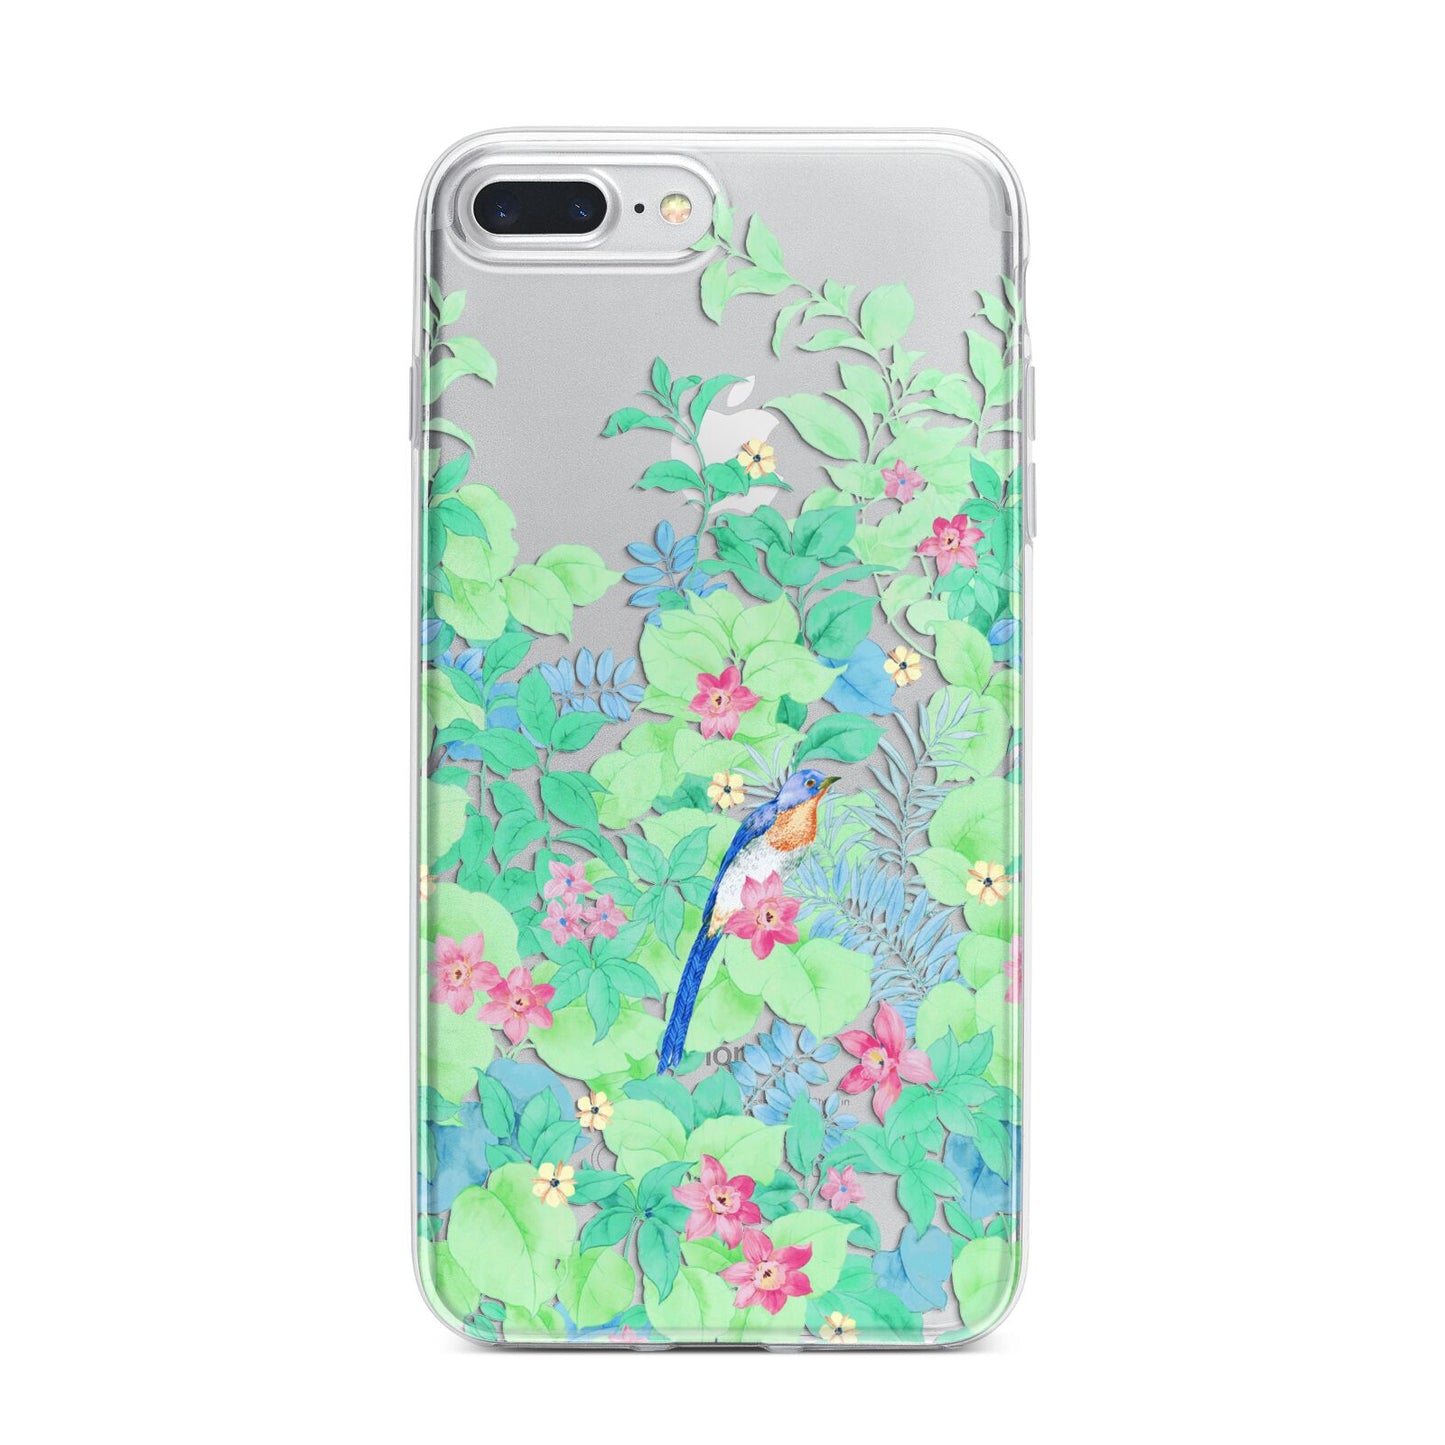 Watercolour Floral iPhone 7 Plus Bumper Case on Silver iPhone